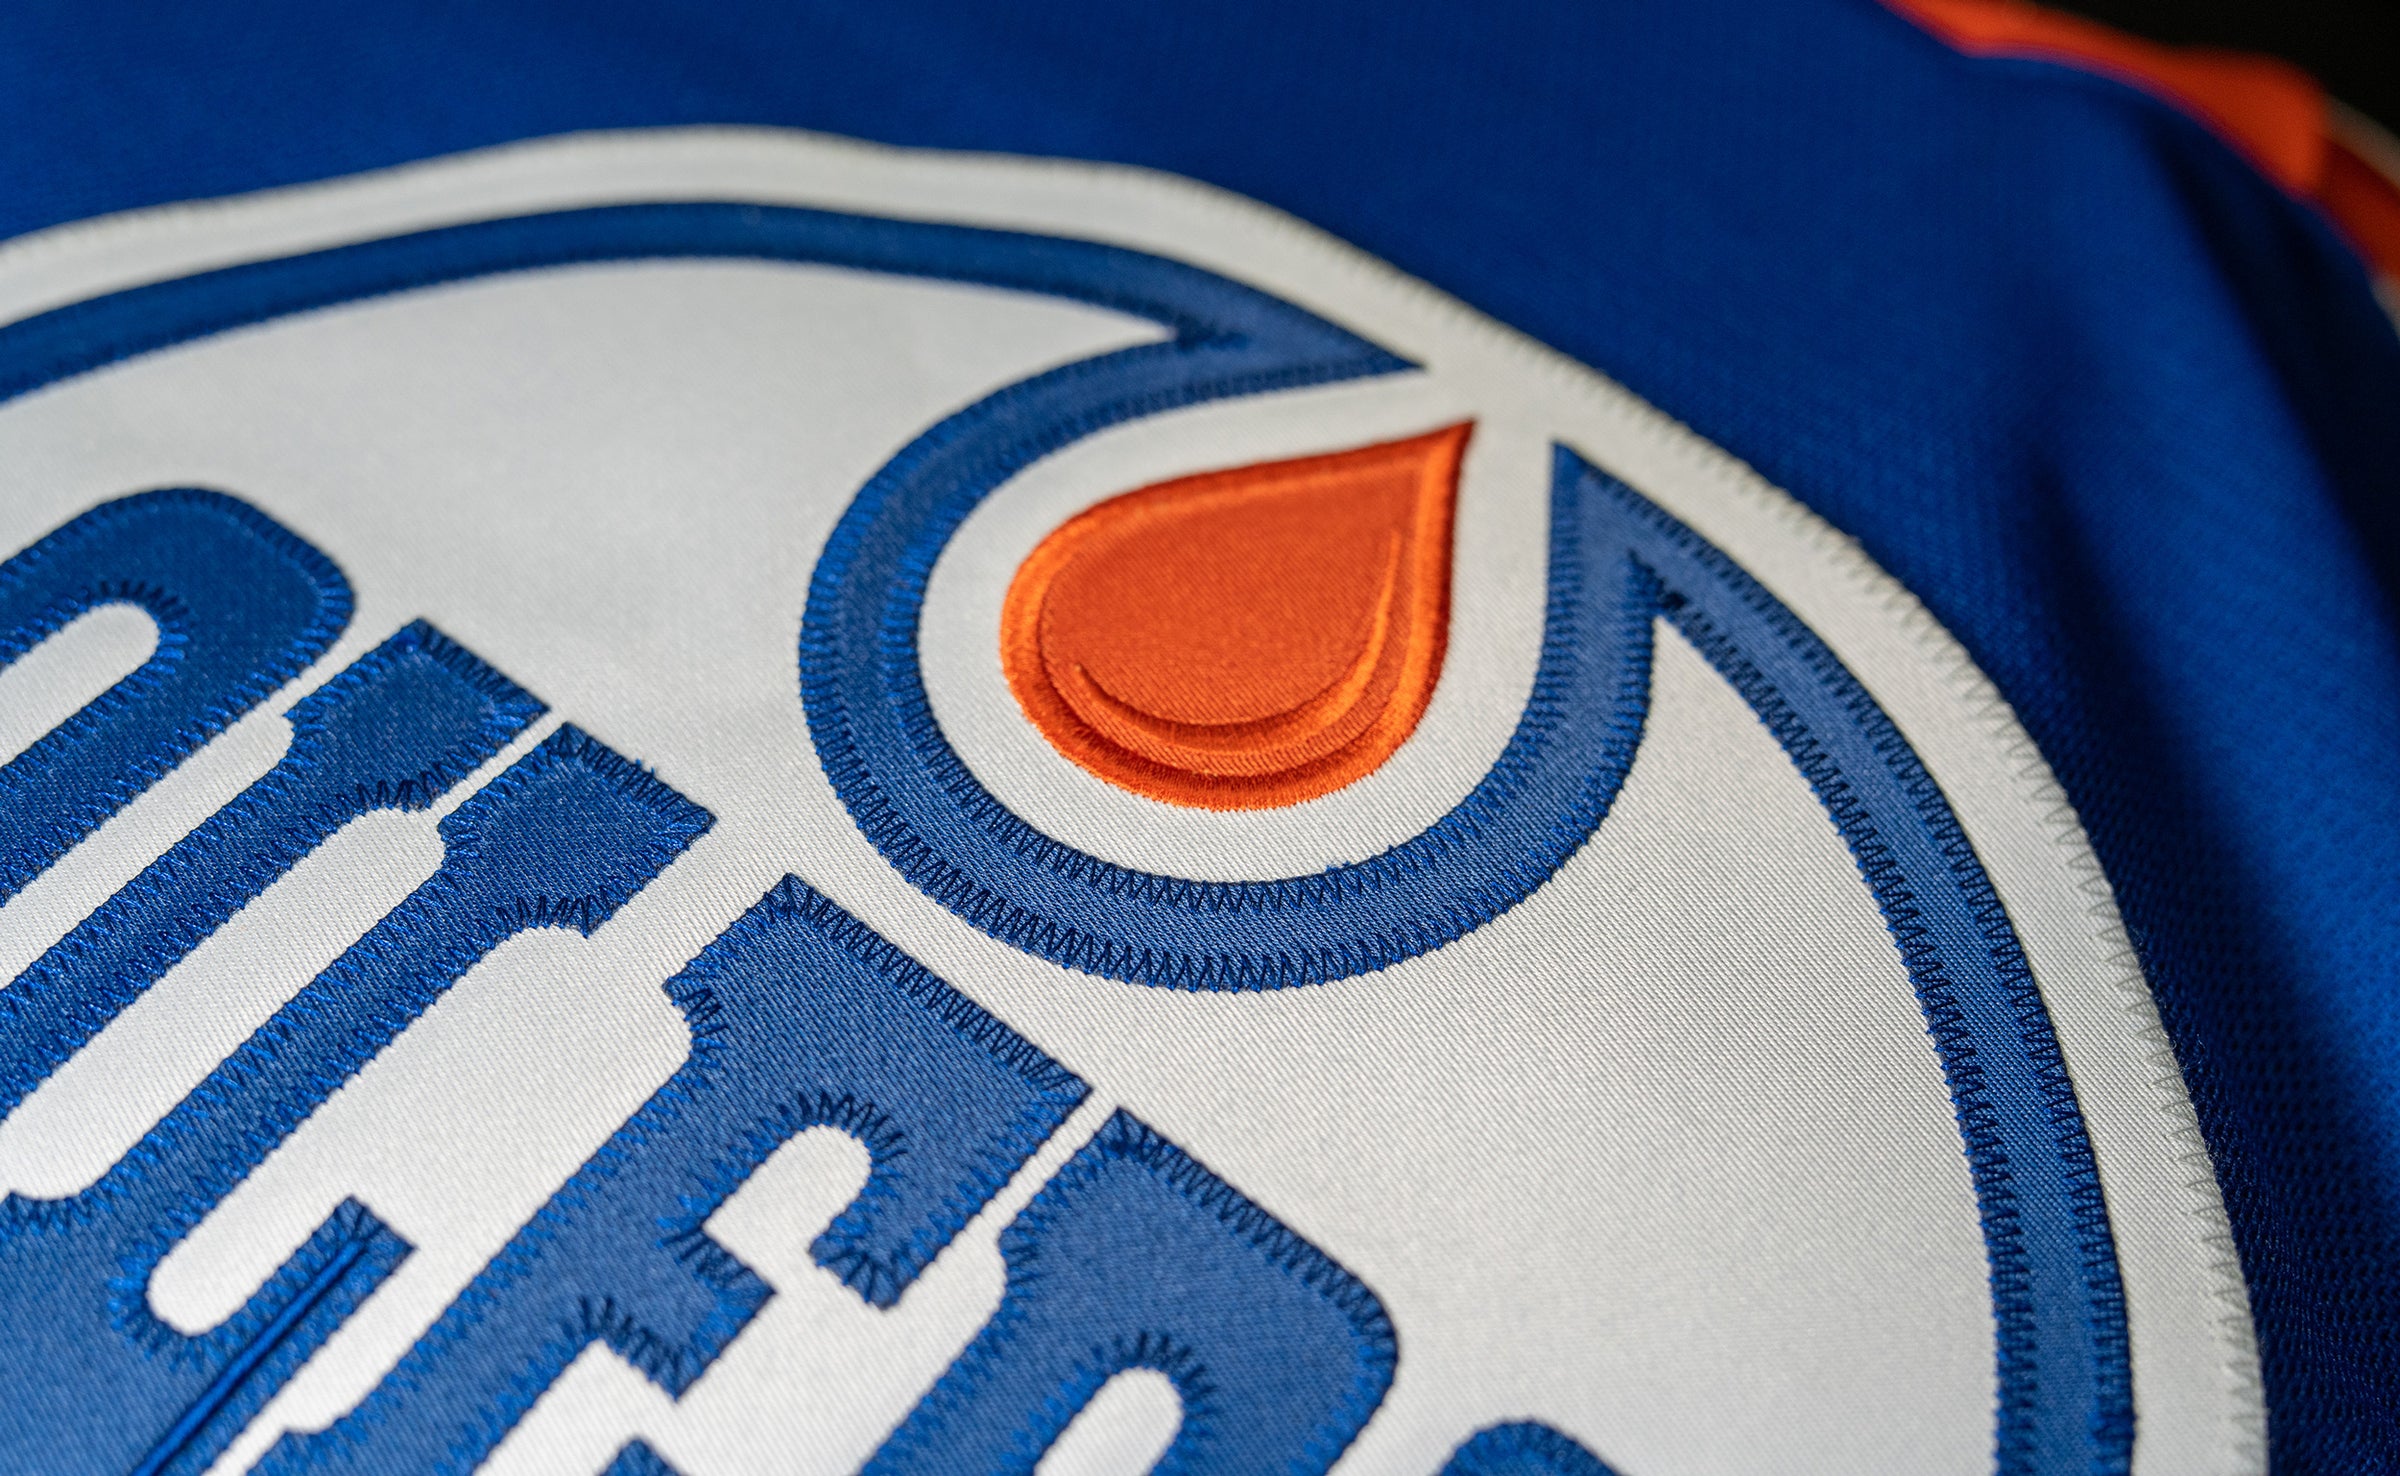 Edmonton Oilers Youth Jerseys  Home, Away, Alternate – ICE District  Authentics